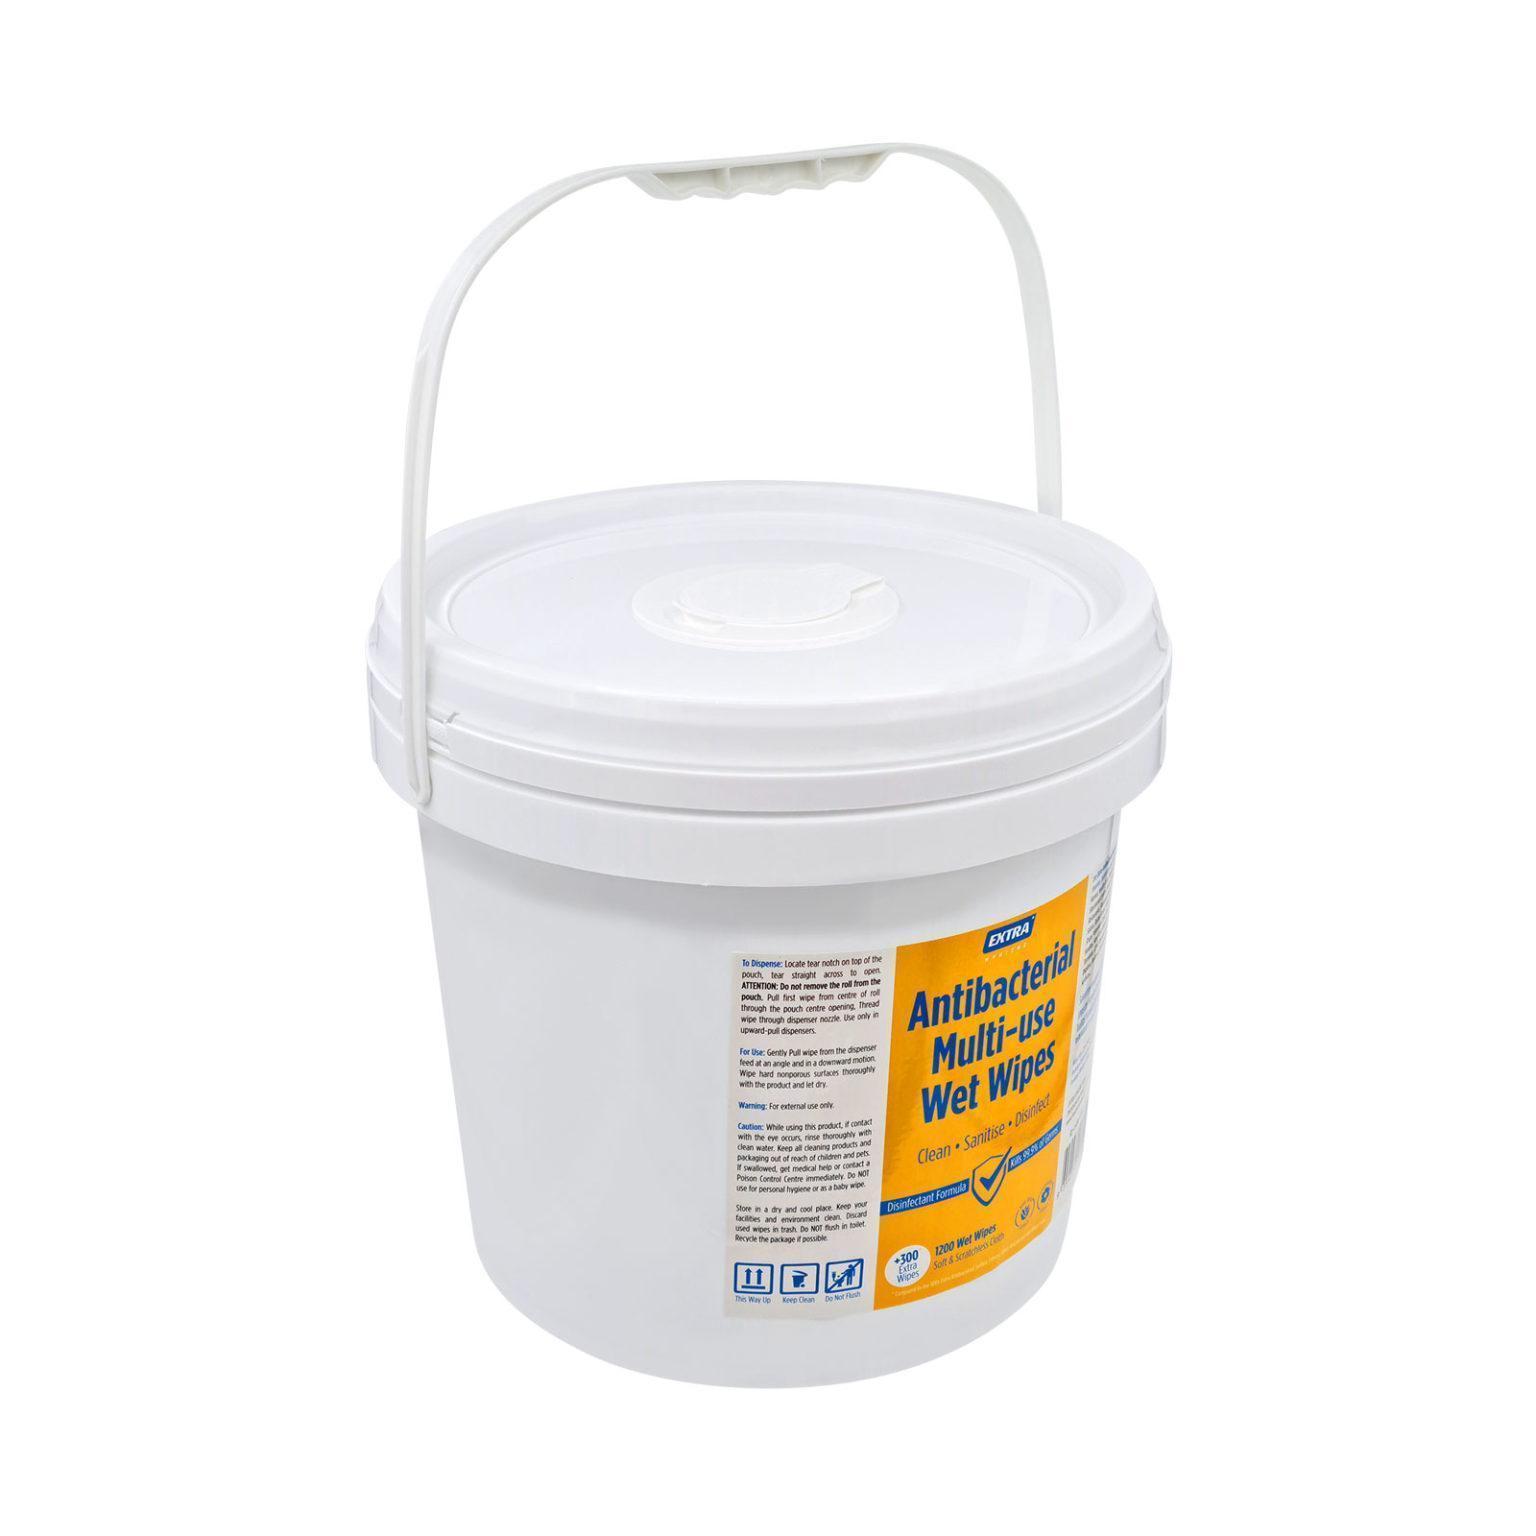 Extra antibacterial multi-use wet wipes roll 1200s bucket handle